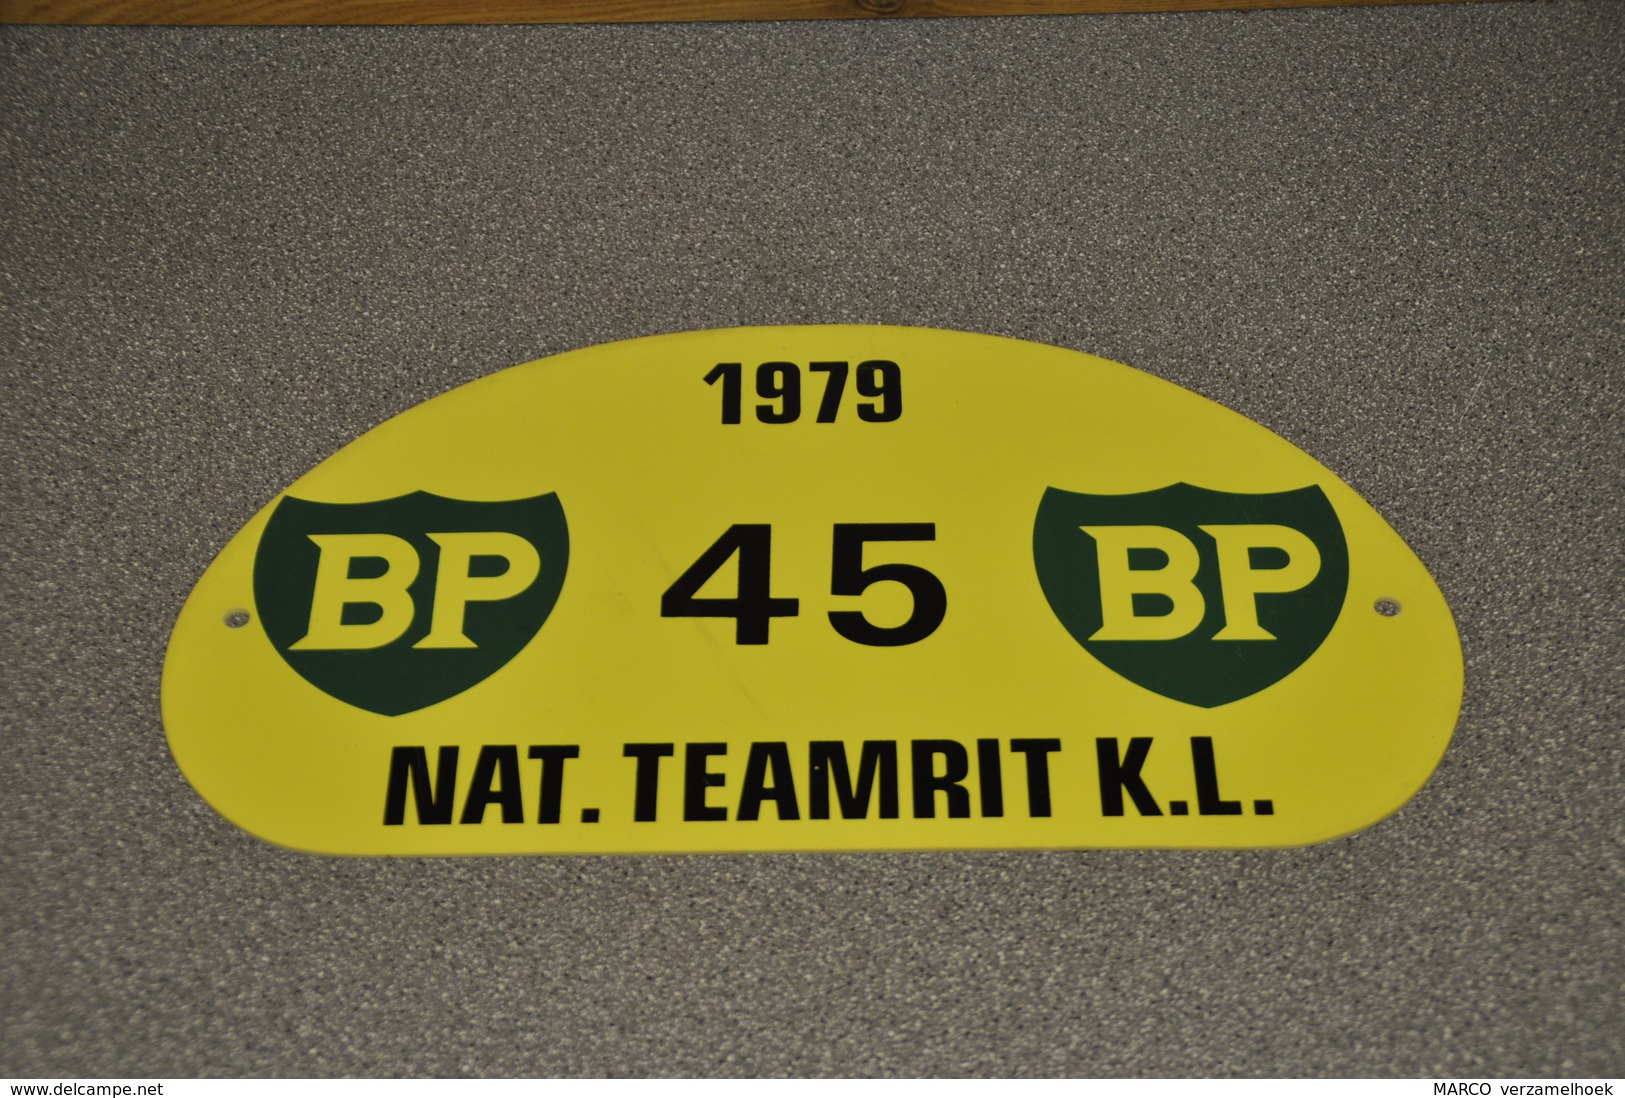 Rally Plaat-rallye Plaque Plastic: Nat. Teamrit K.L. 1979 BP - Targhe Rallye